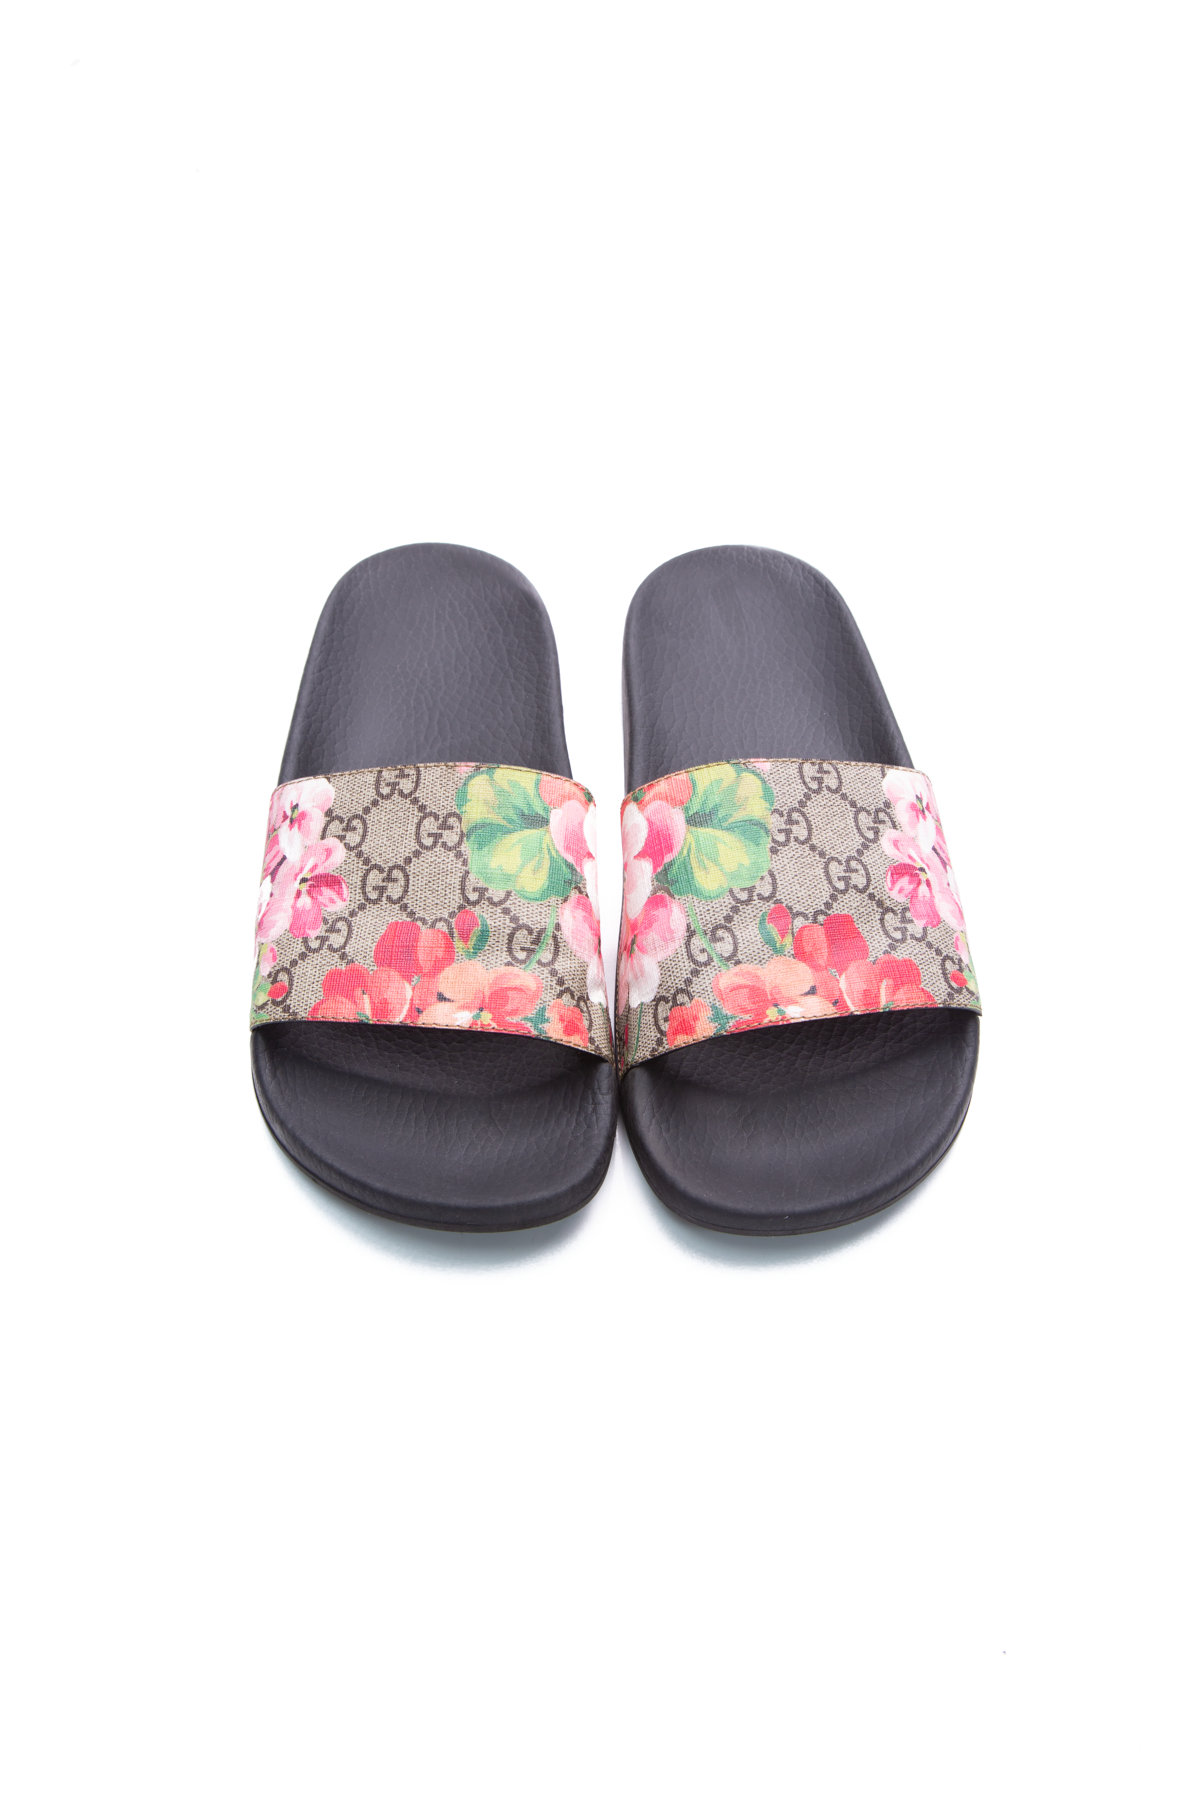 Gucci Pink Blooms Slide Sandals- Size 40